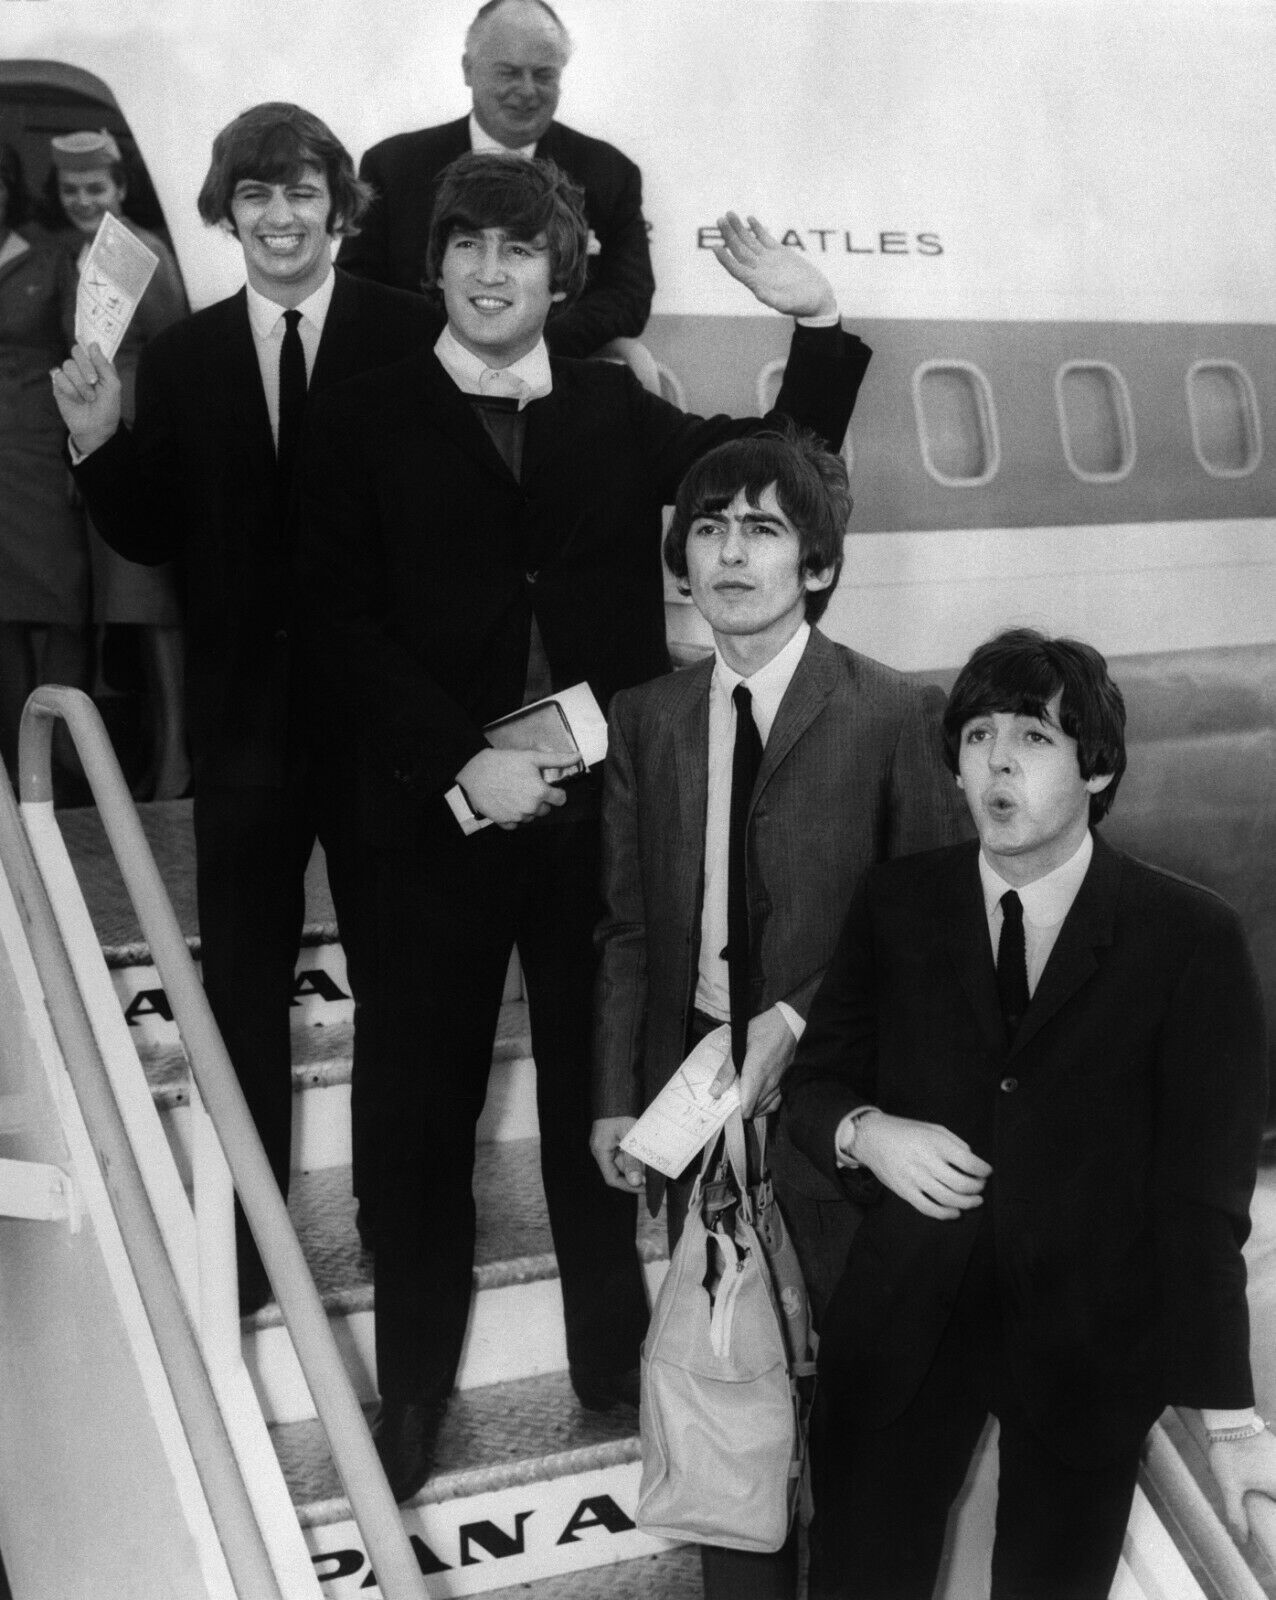 Beatles Landing In New York On Pan American Air B&w Photograph Sharp Details